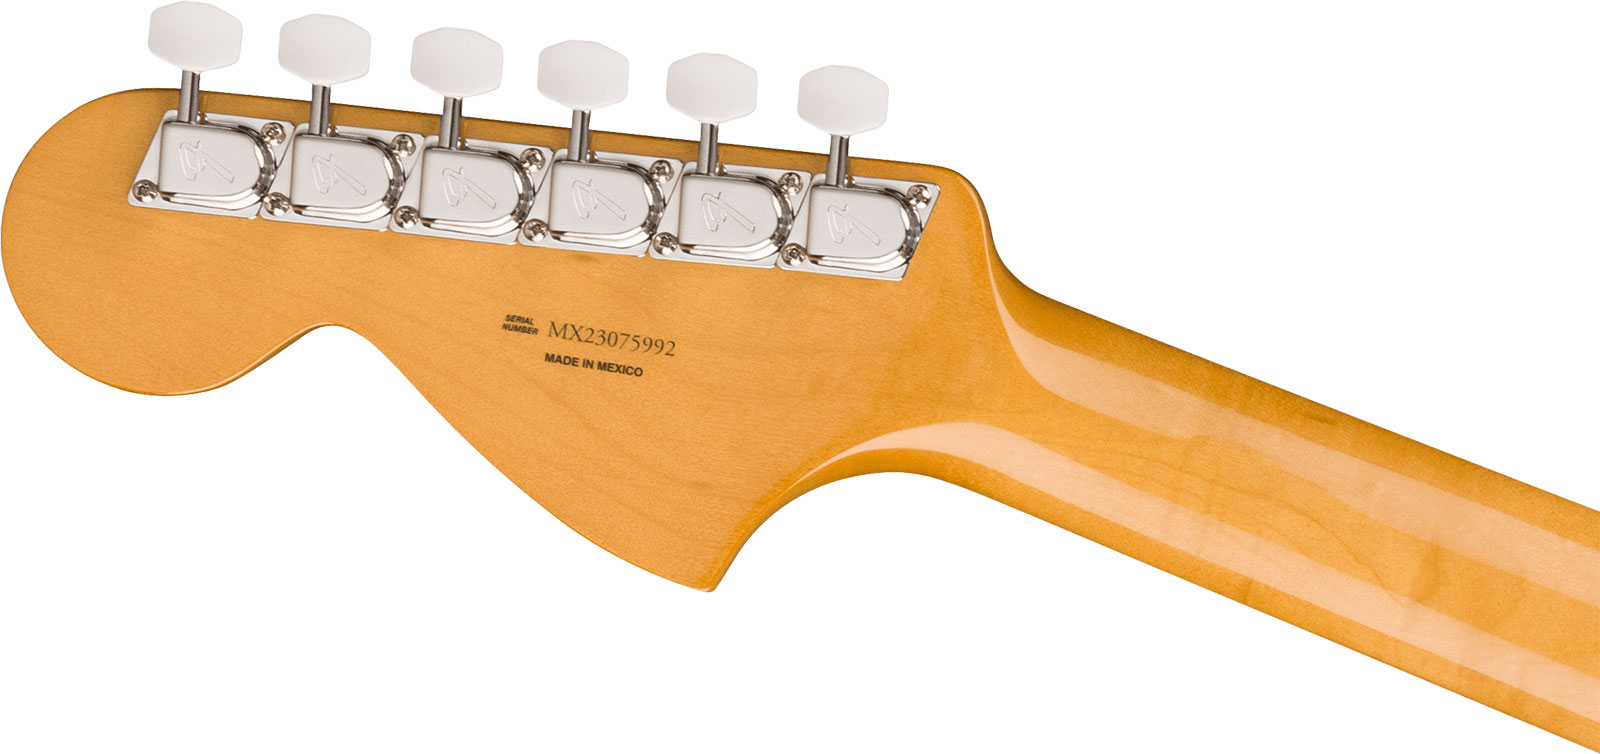 Fender Mustang 70s Competition Vintera 2 Mex 2s Trem Rw - Competition Orange - Retro rock electric guitar - Variation 3